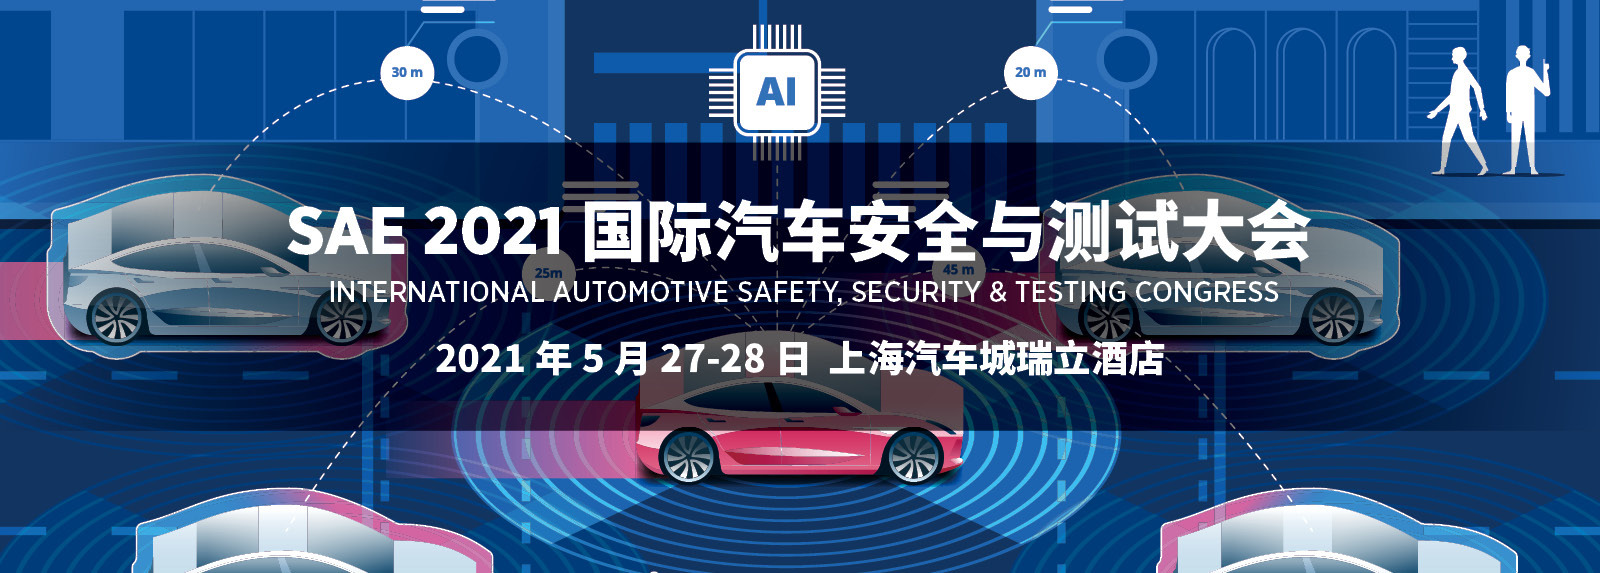 SAE 2021 国际汽车安全与测试大会